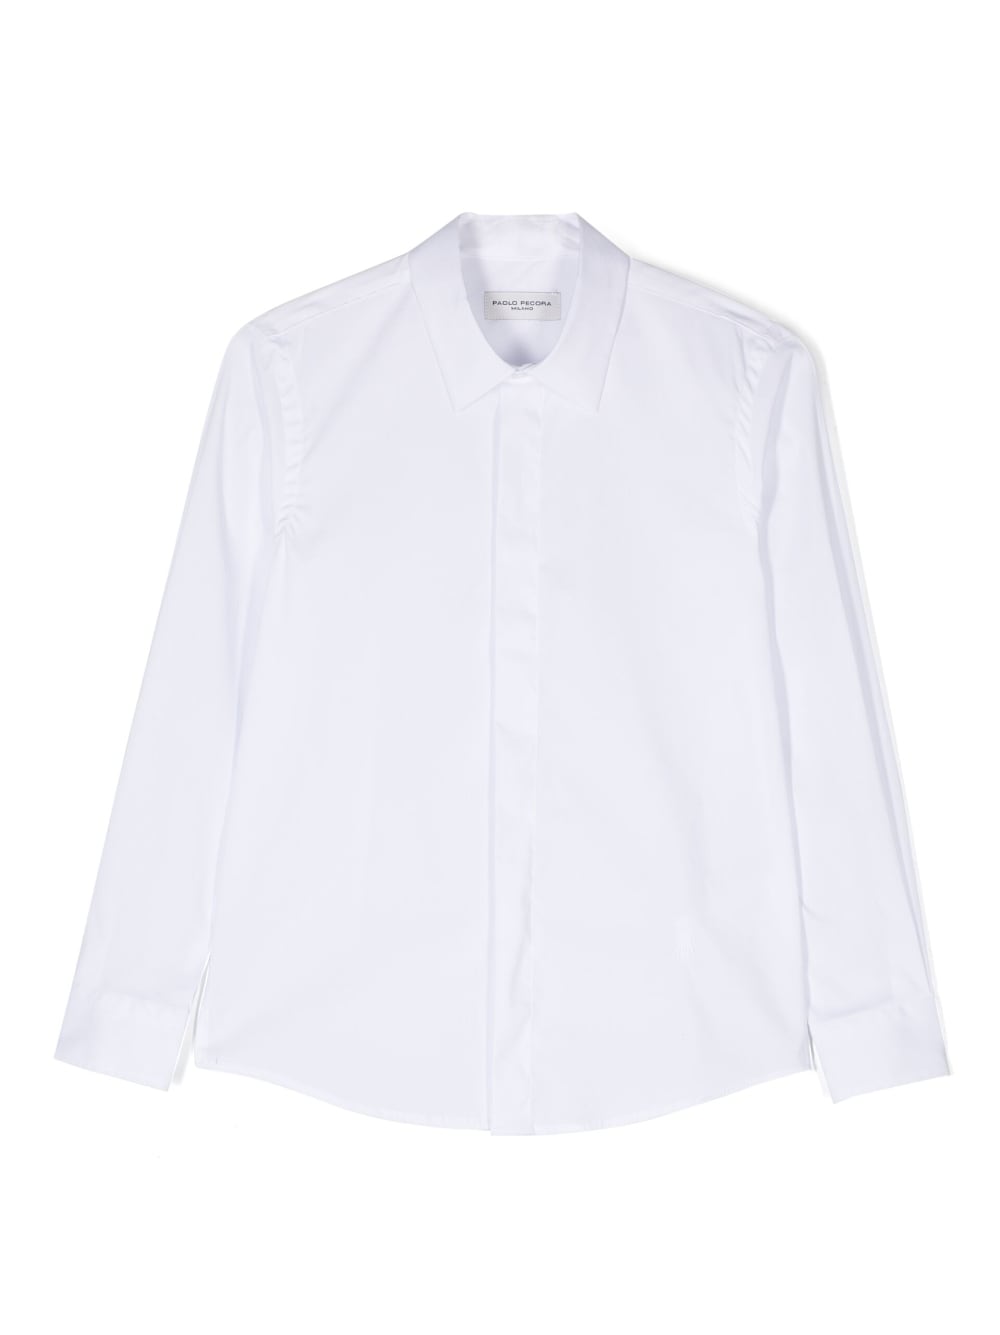 White shirt for boys